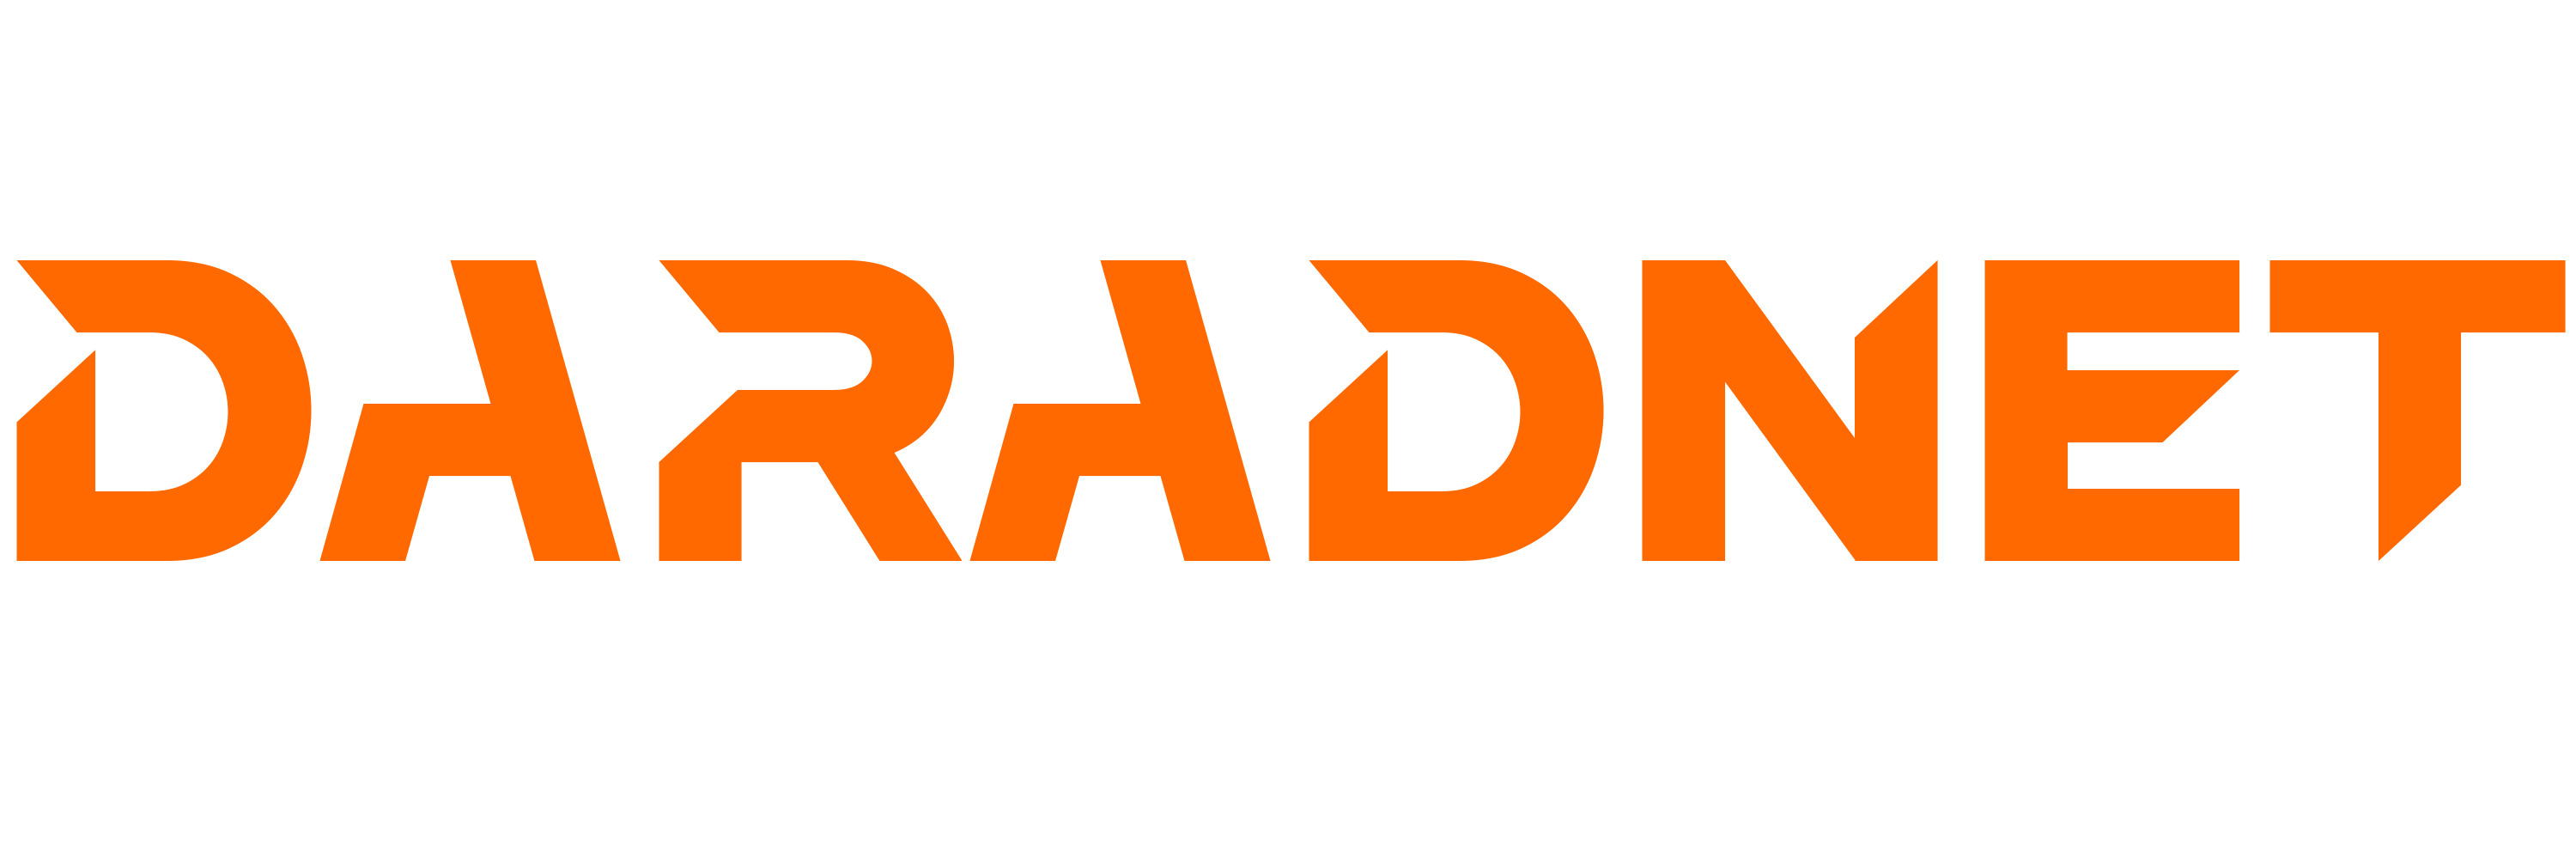 DaradNet Logo Type